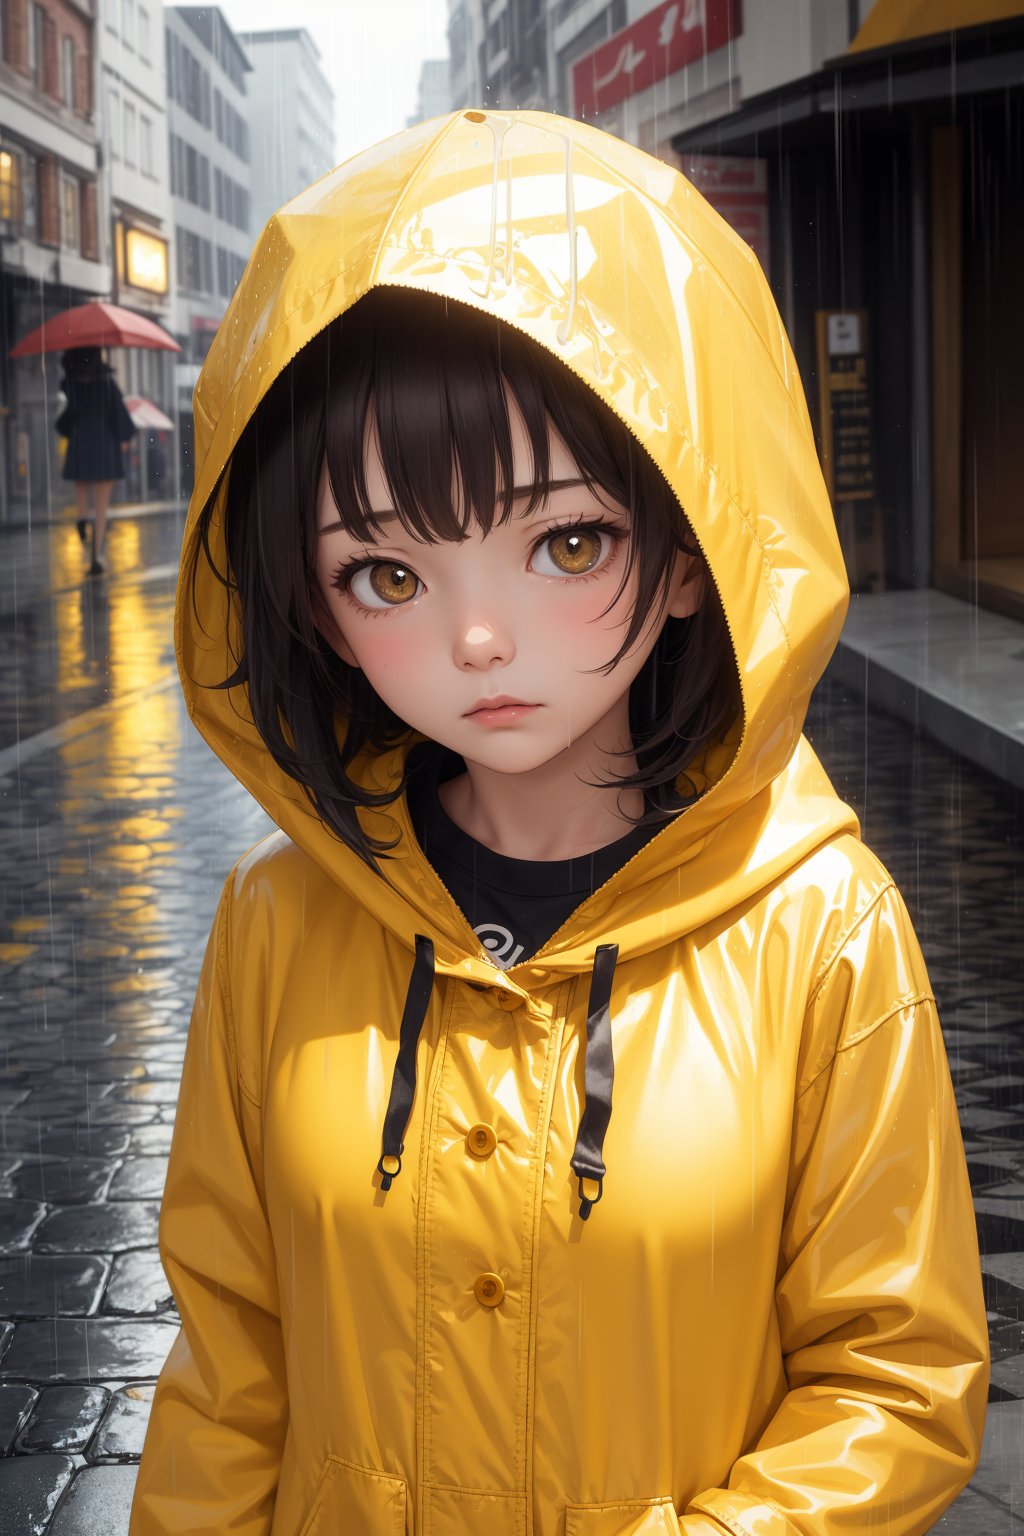 masterpiece, best quality, 1girl, yellow raincoat, rain, sad face, hood up, looking at viewer, cobblestone, street, raining, close view